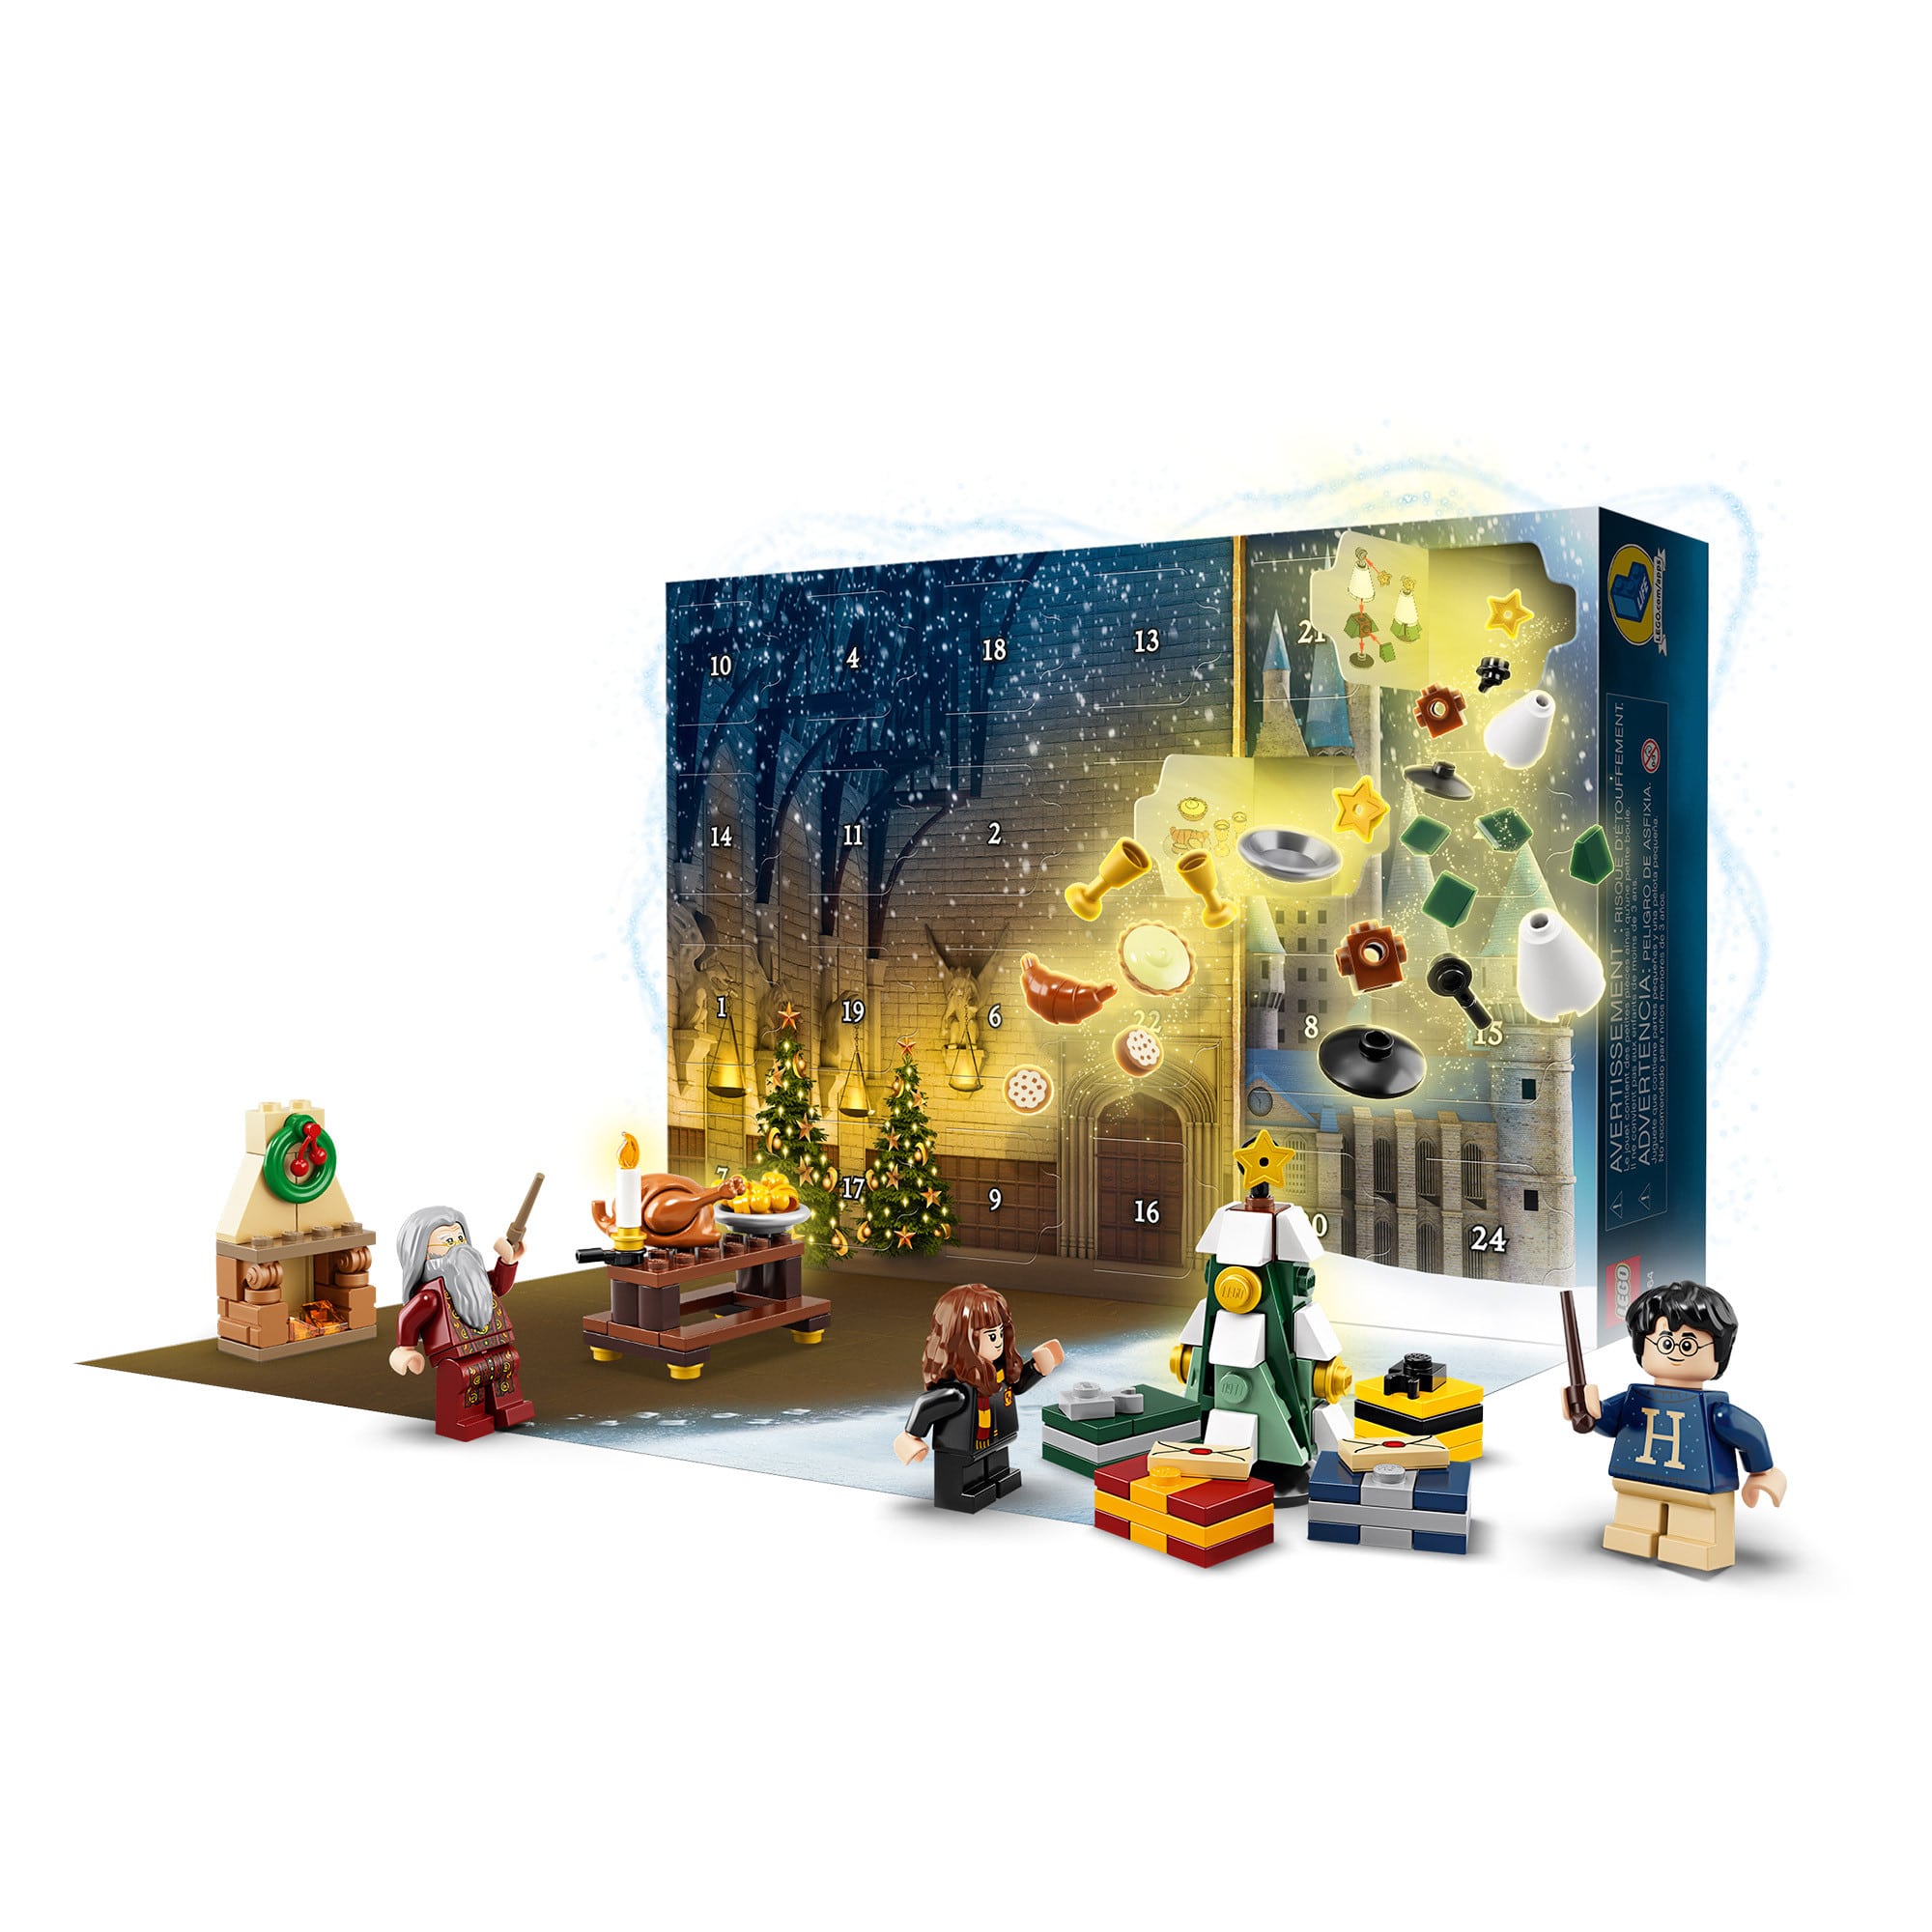 LEGO Harry Potter 75964 - Advent Calendar